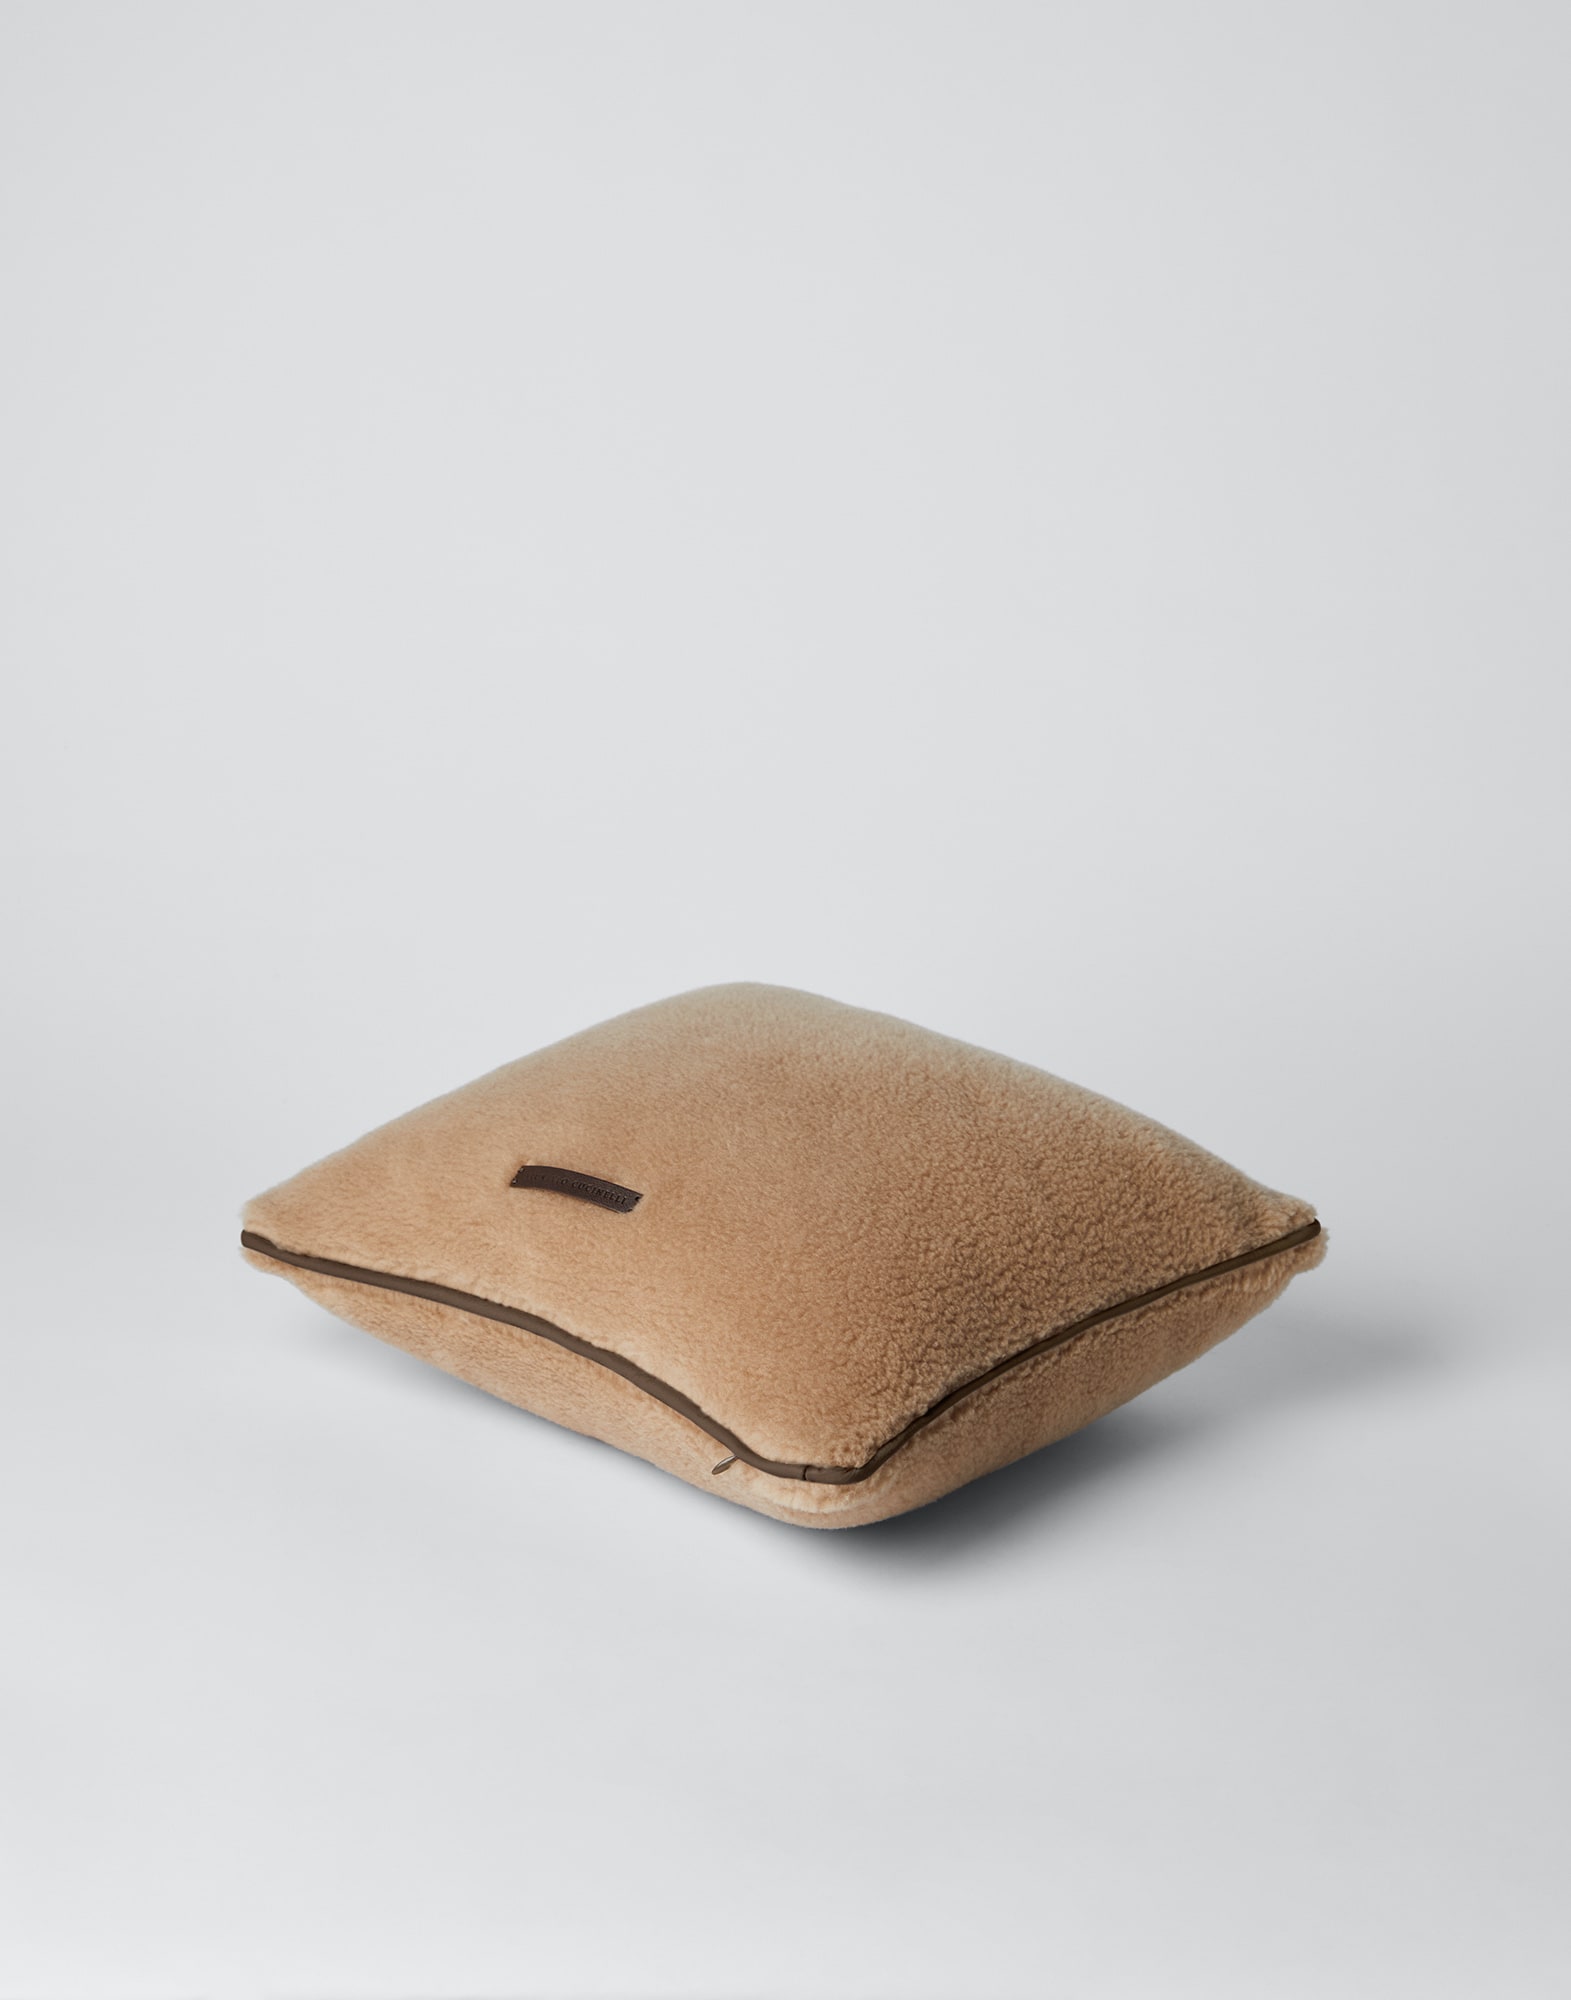 Fabric cushion